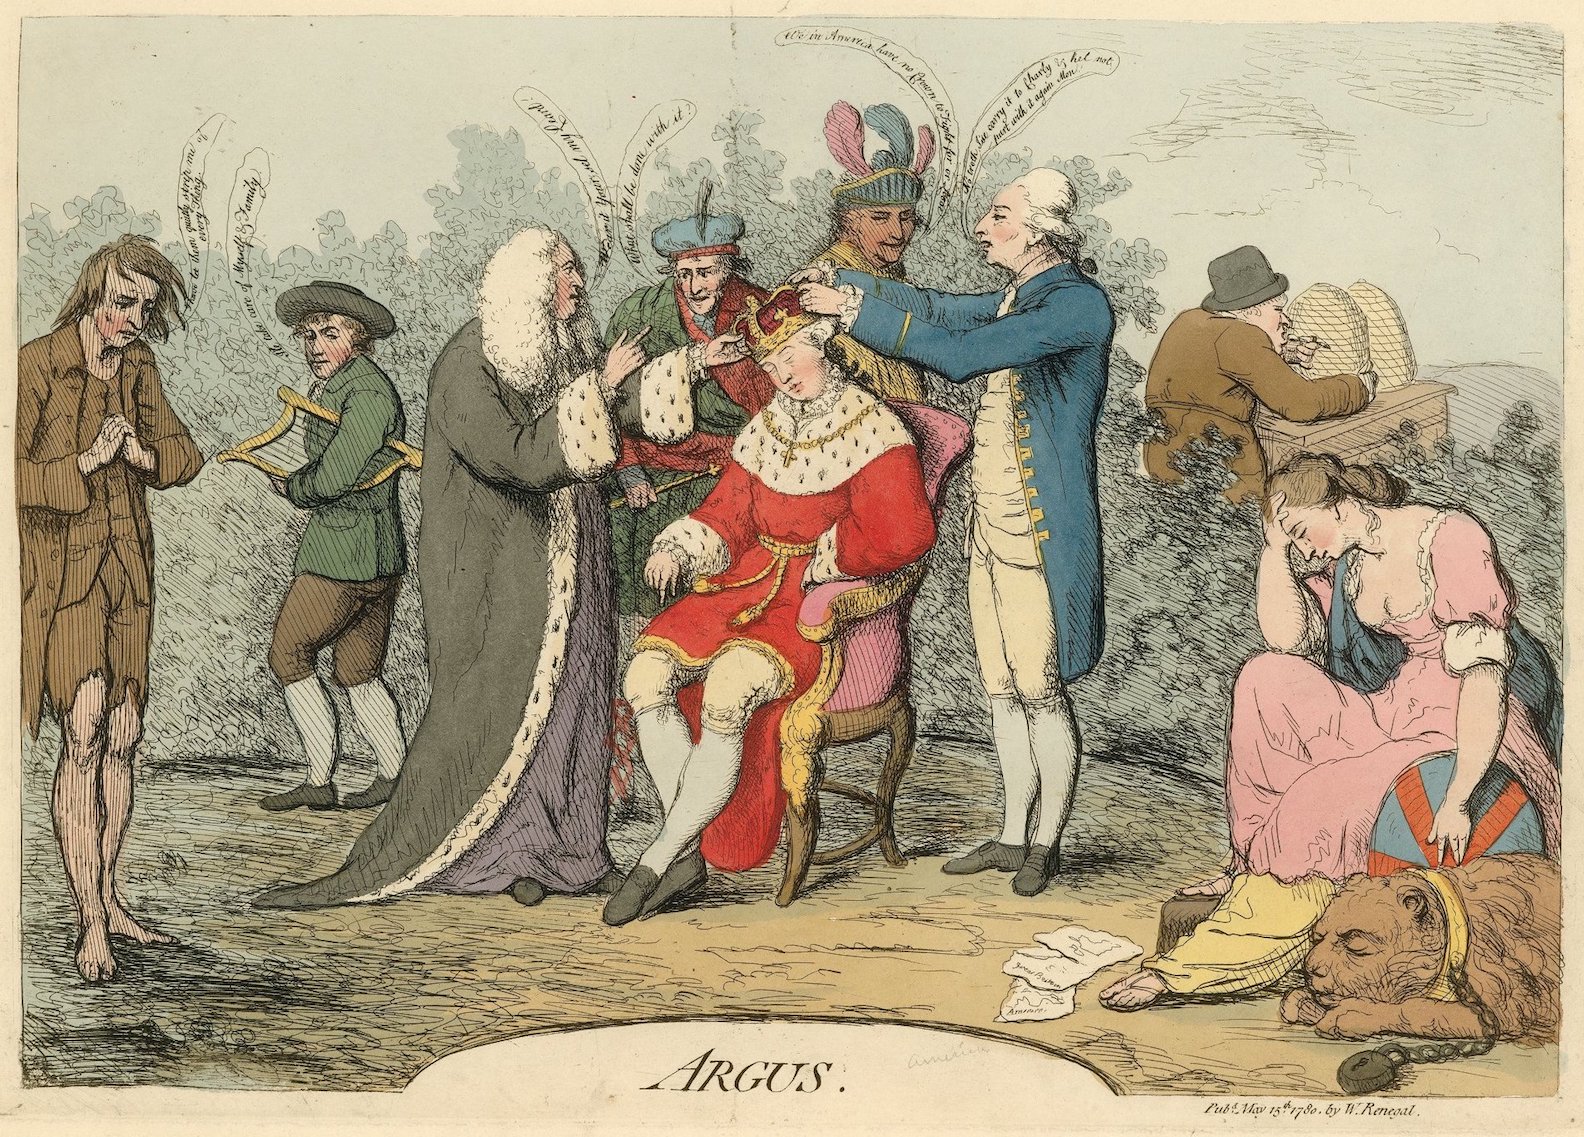 political cartoon criticizing George III